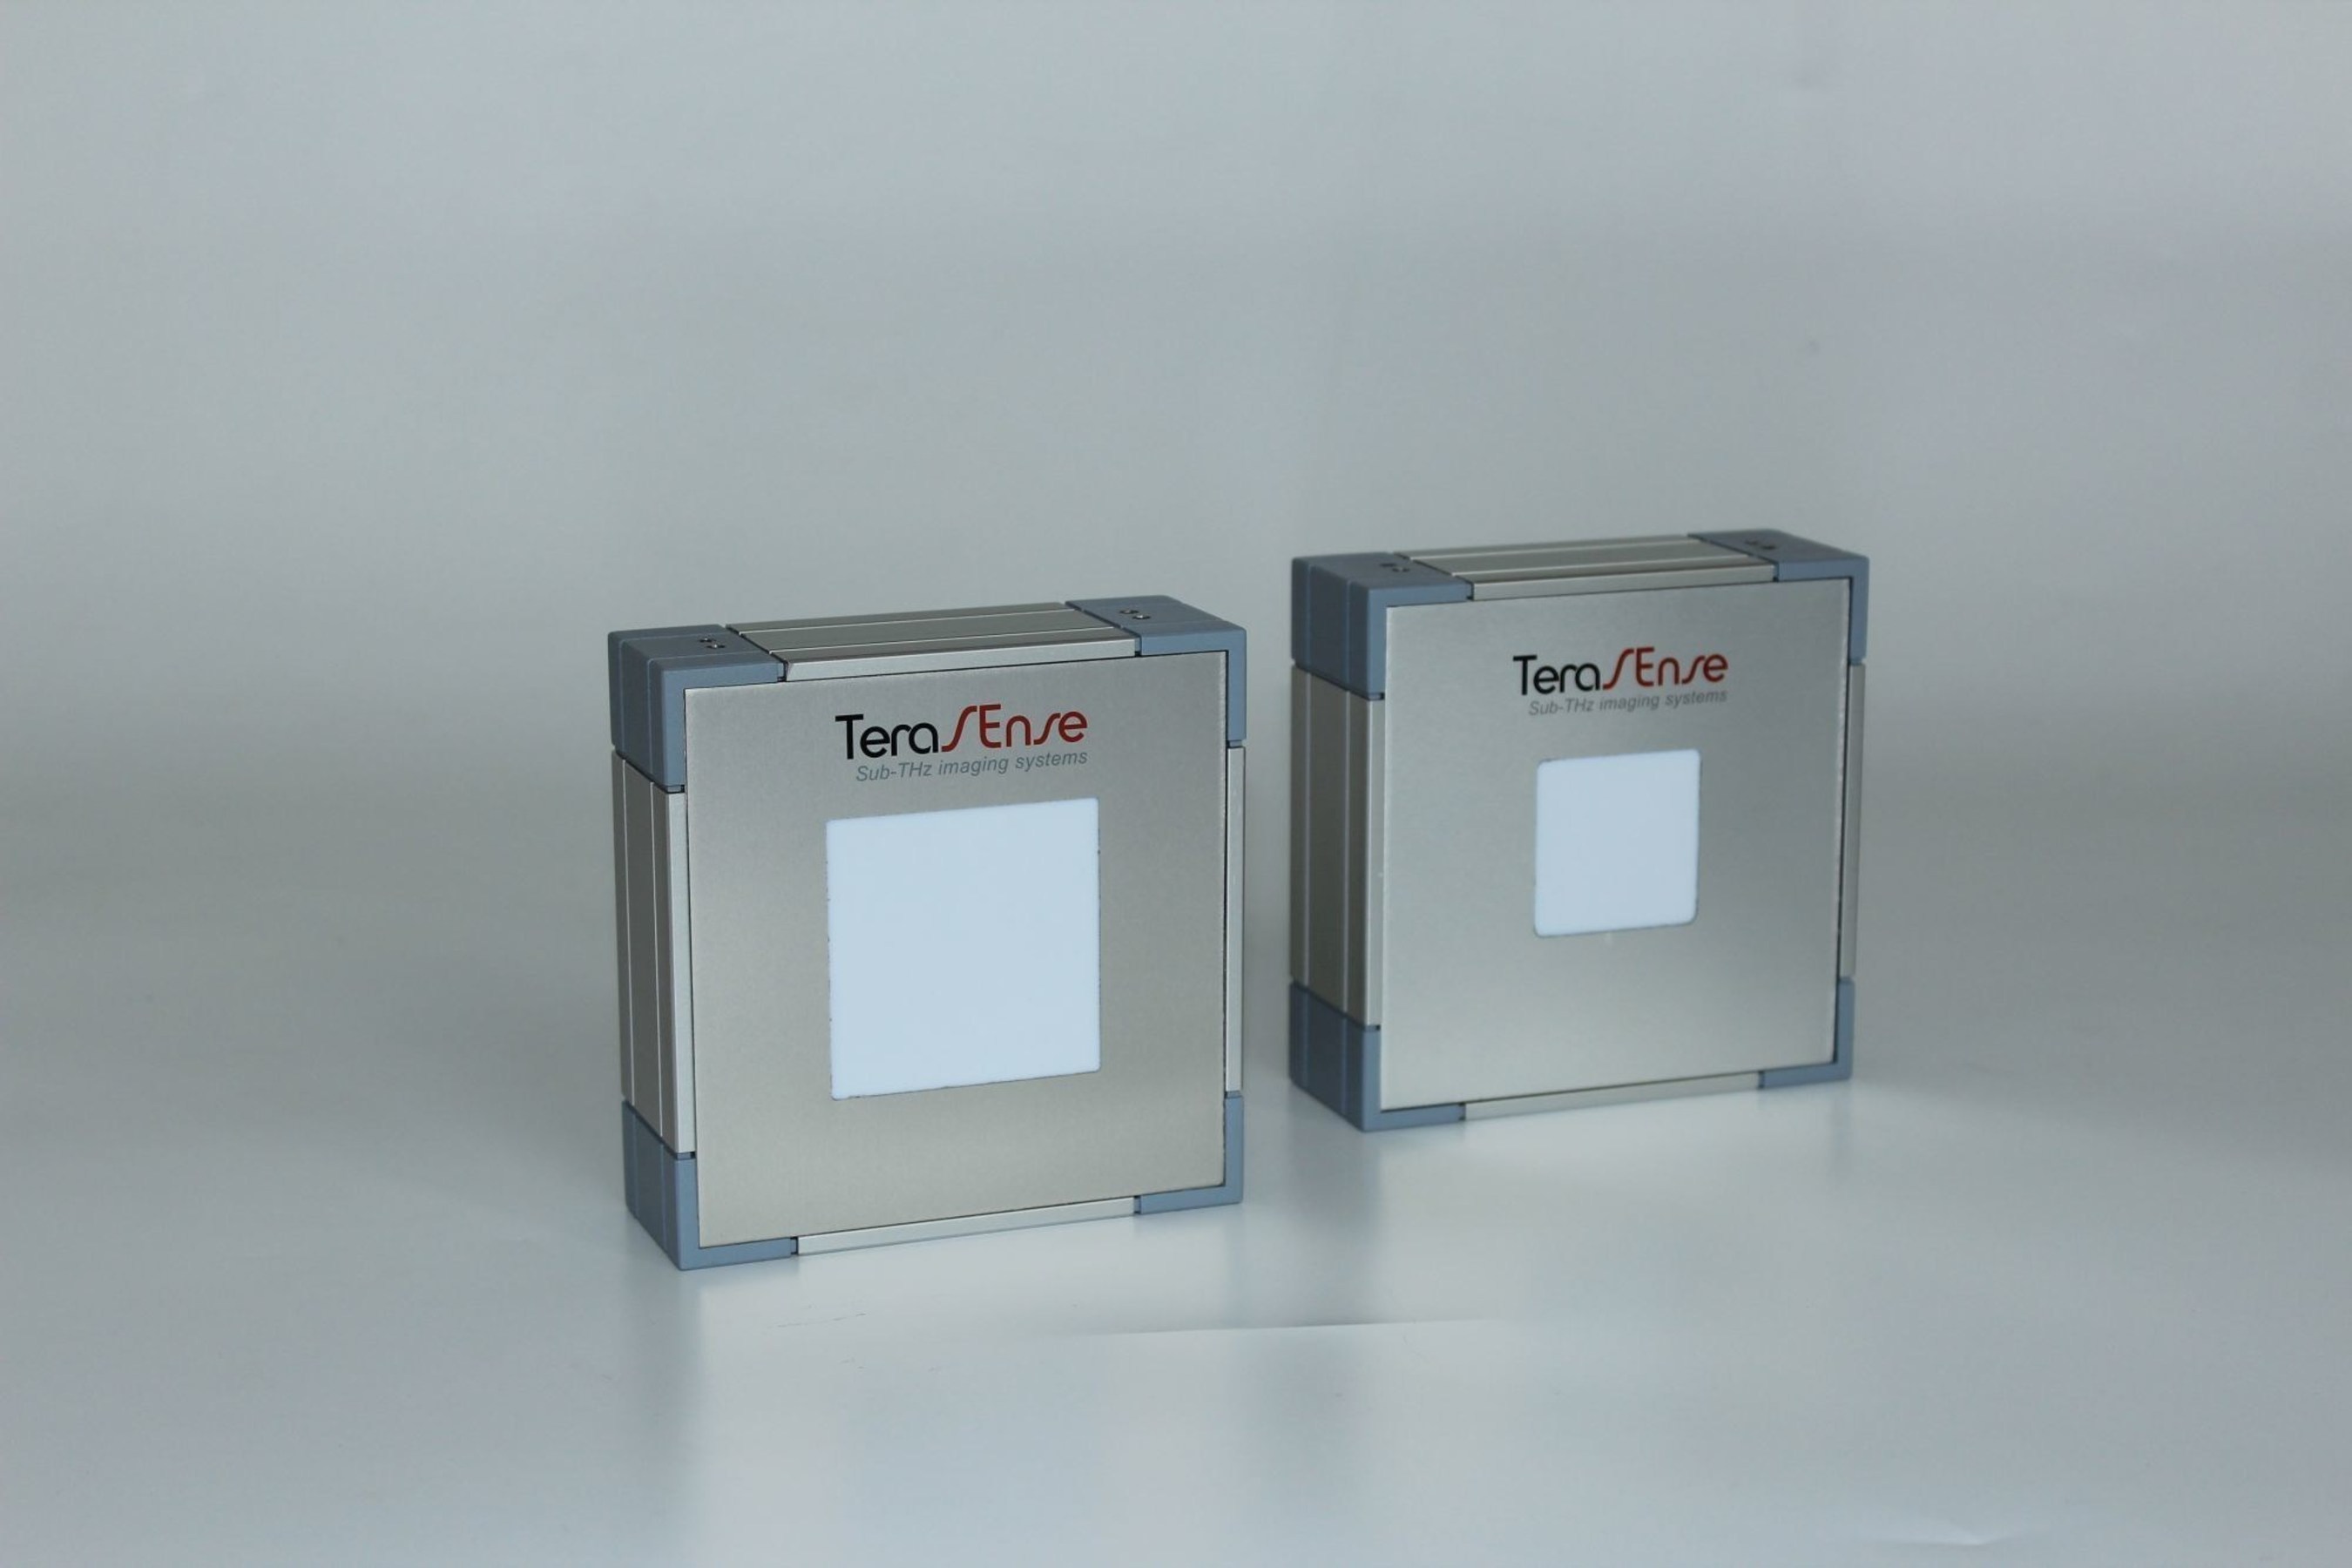 TERA-1024(32x32) and TERA-256(16x16) Terahertz Imaging Cameras (PRNewsFoto/Terasense Group Inc) (PRNewsFoto/Terasense Group Inc)